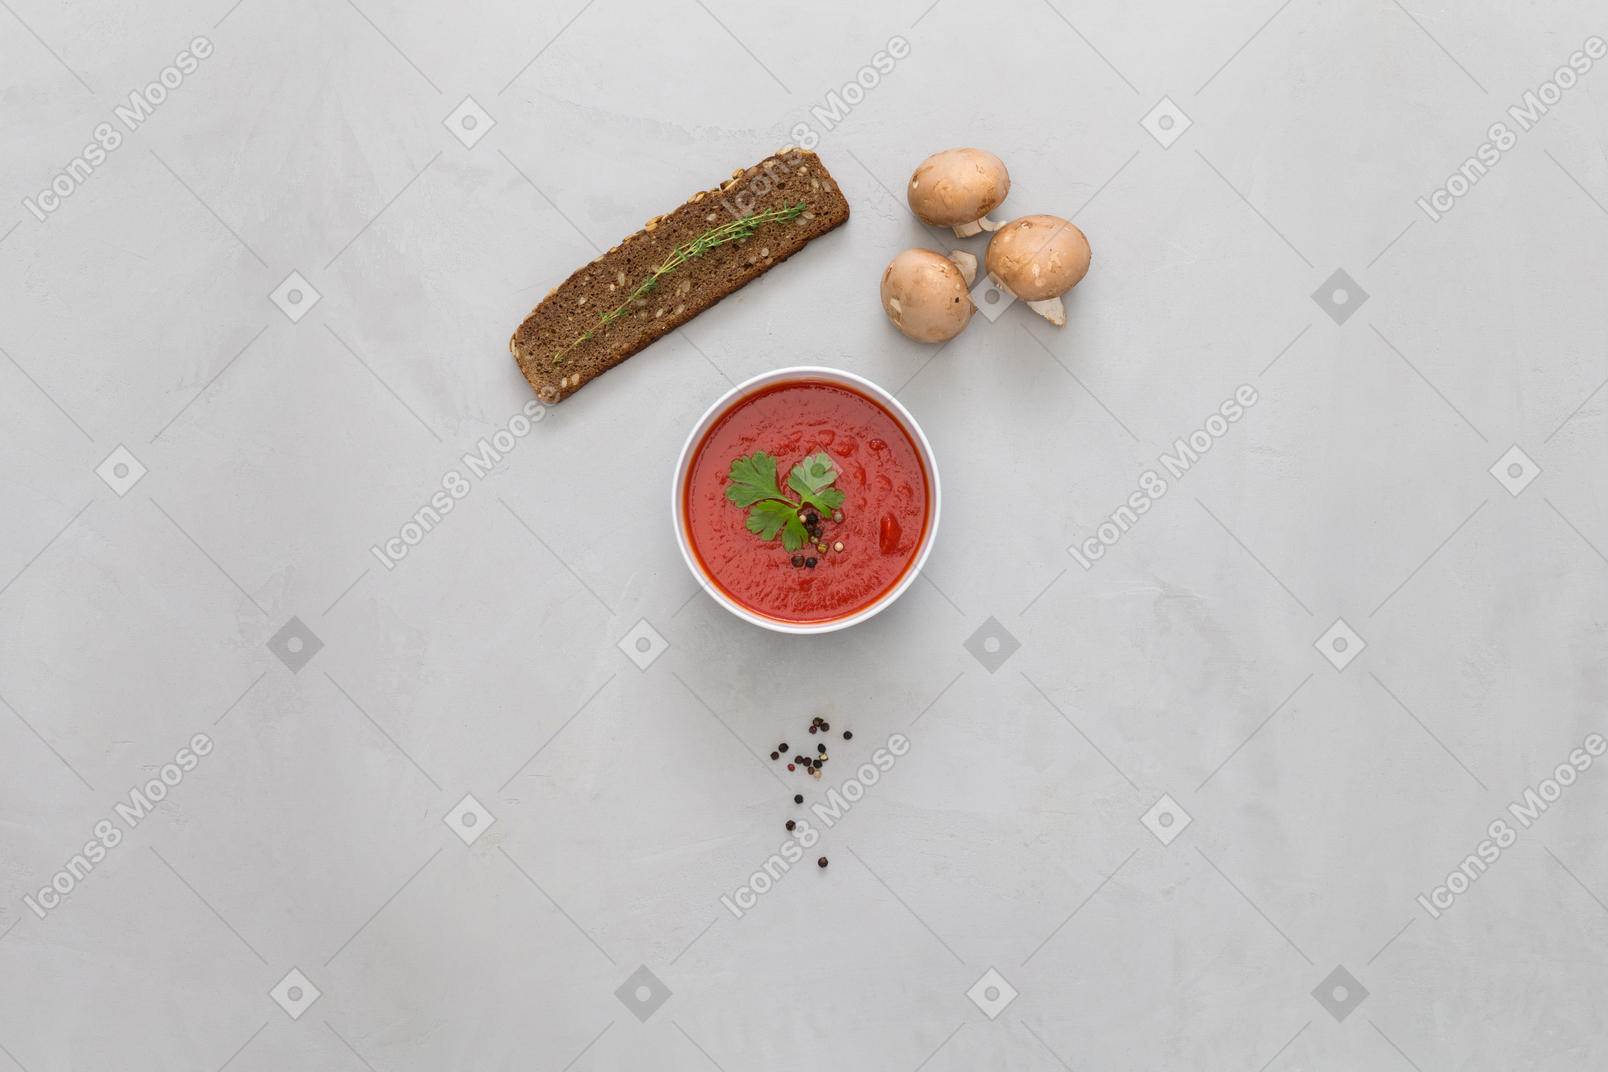 Tomato sauce, snacks and mushrooms